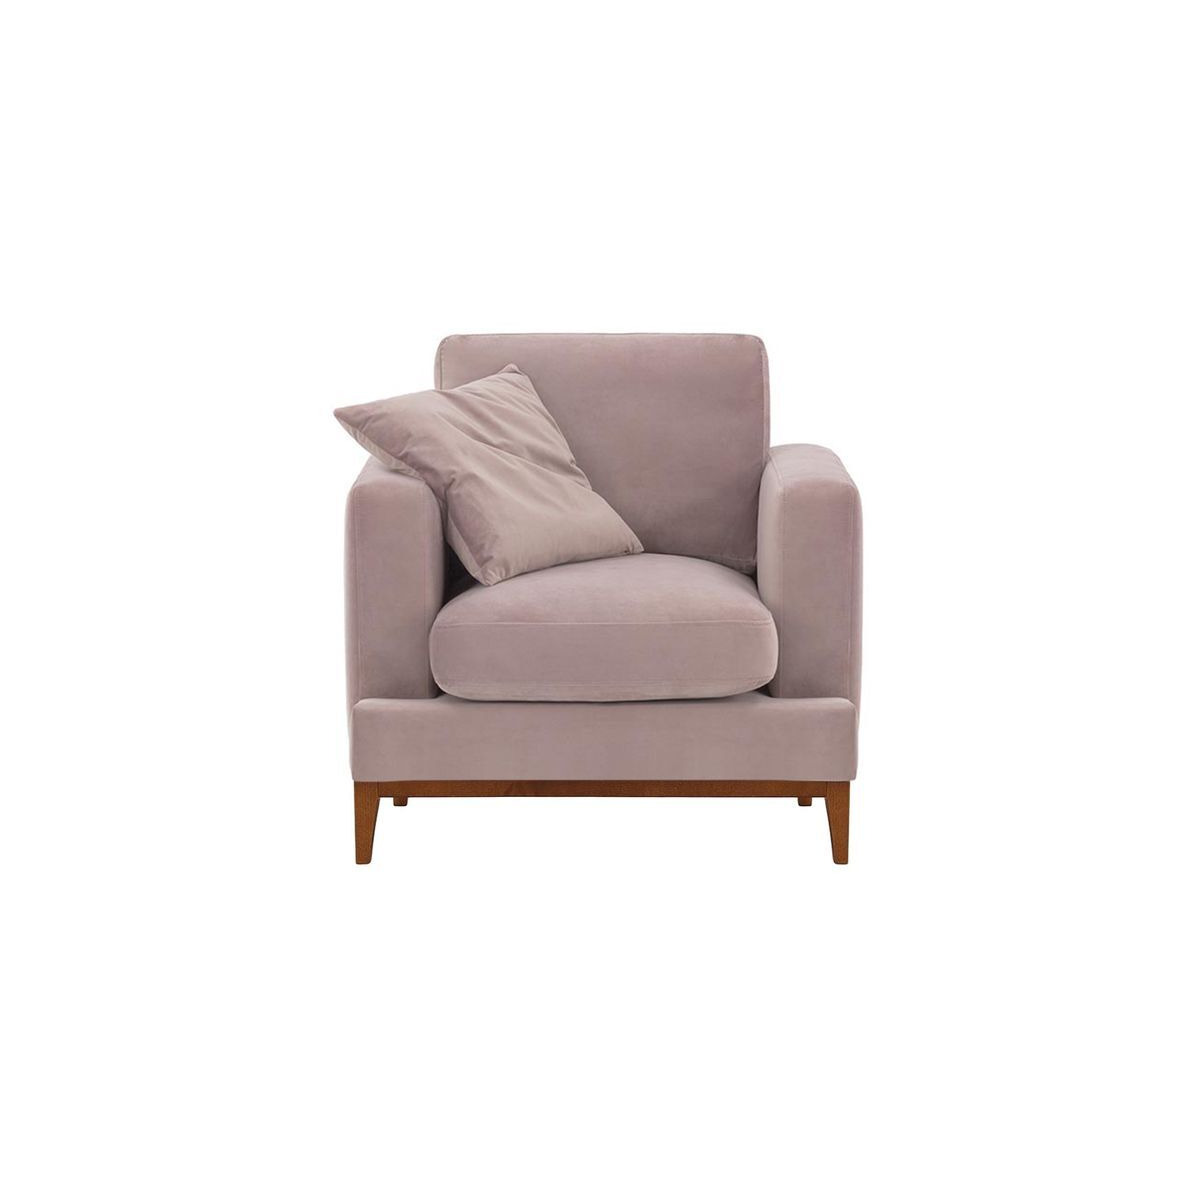 Covex Wood Armchair, lilac, Leg colour: aveo - image 1